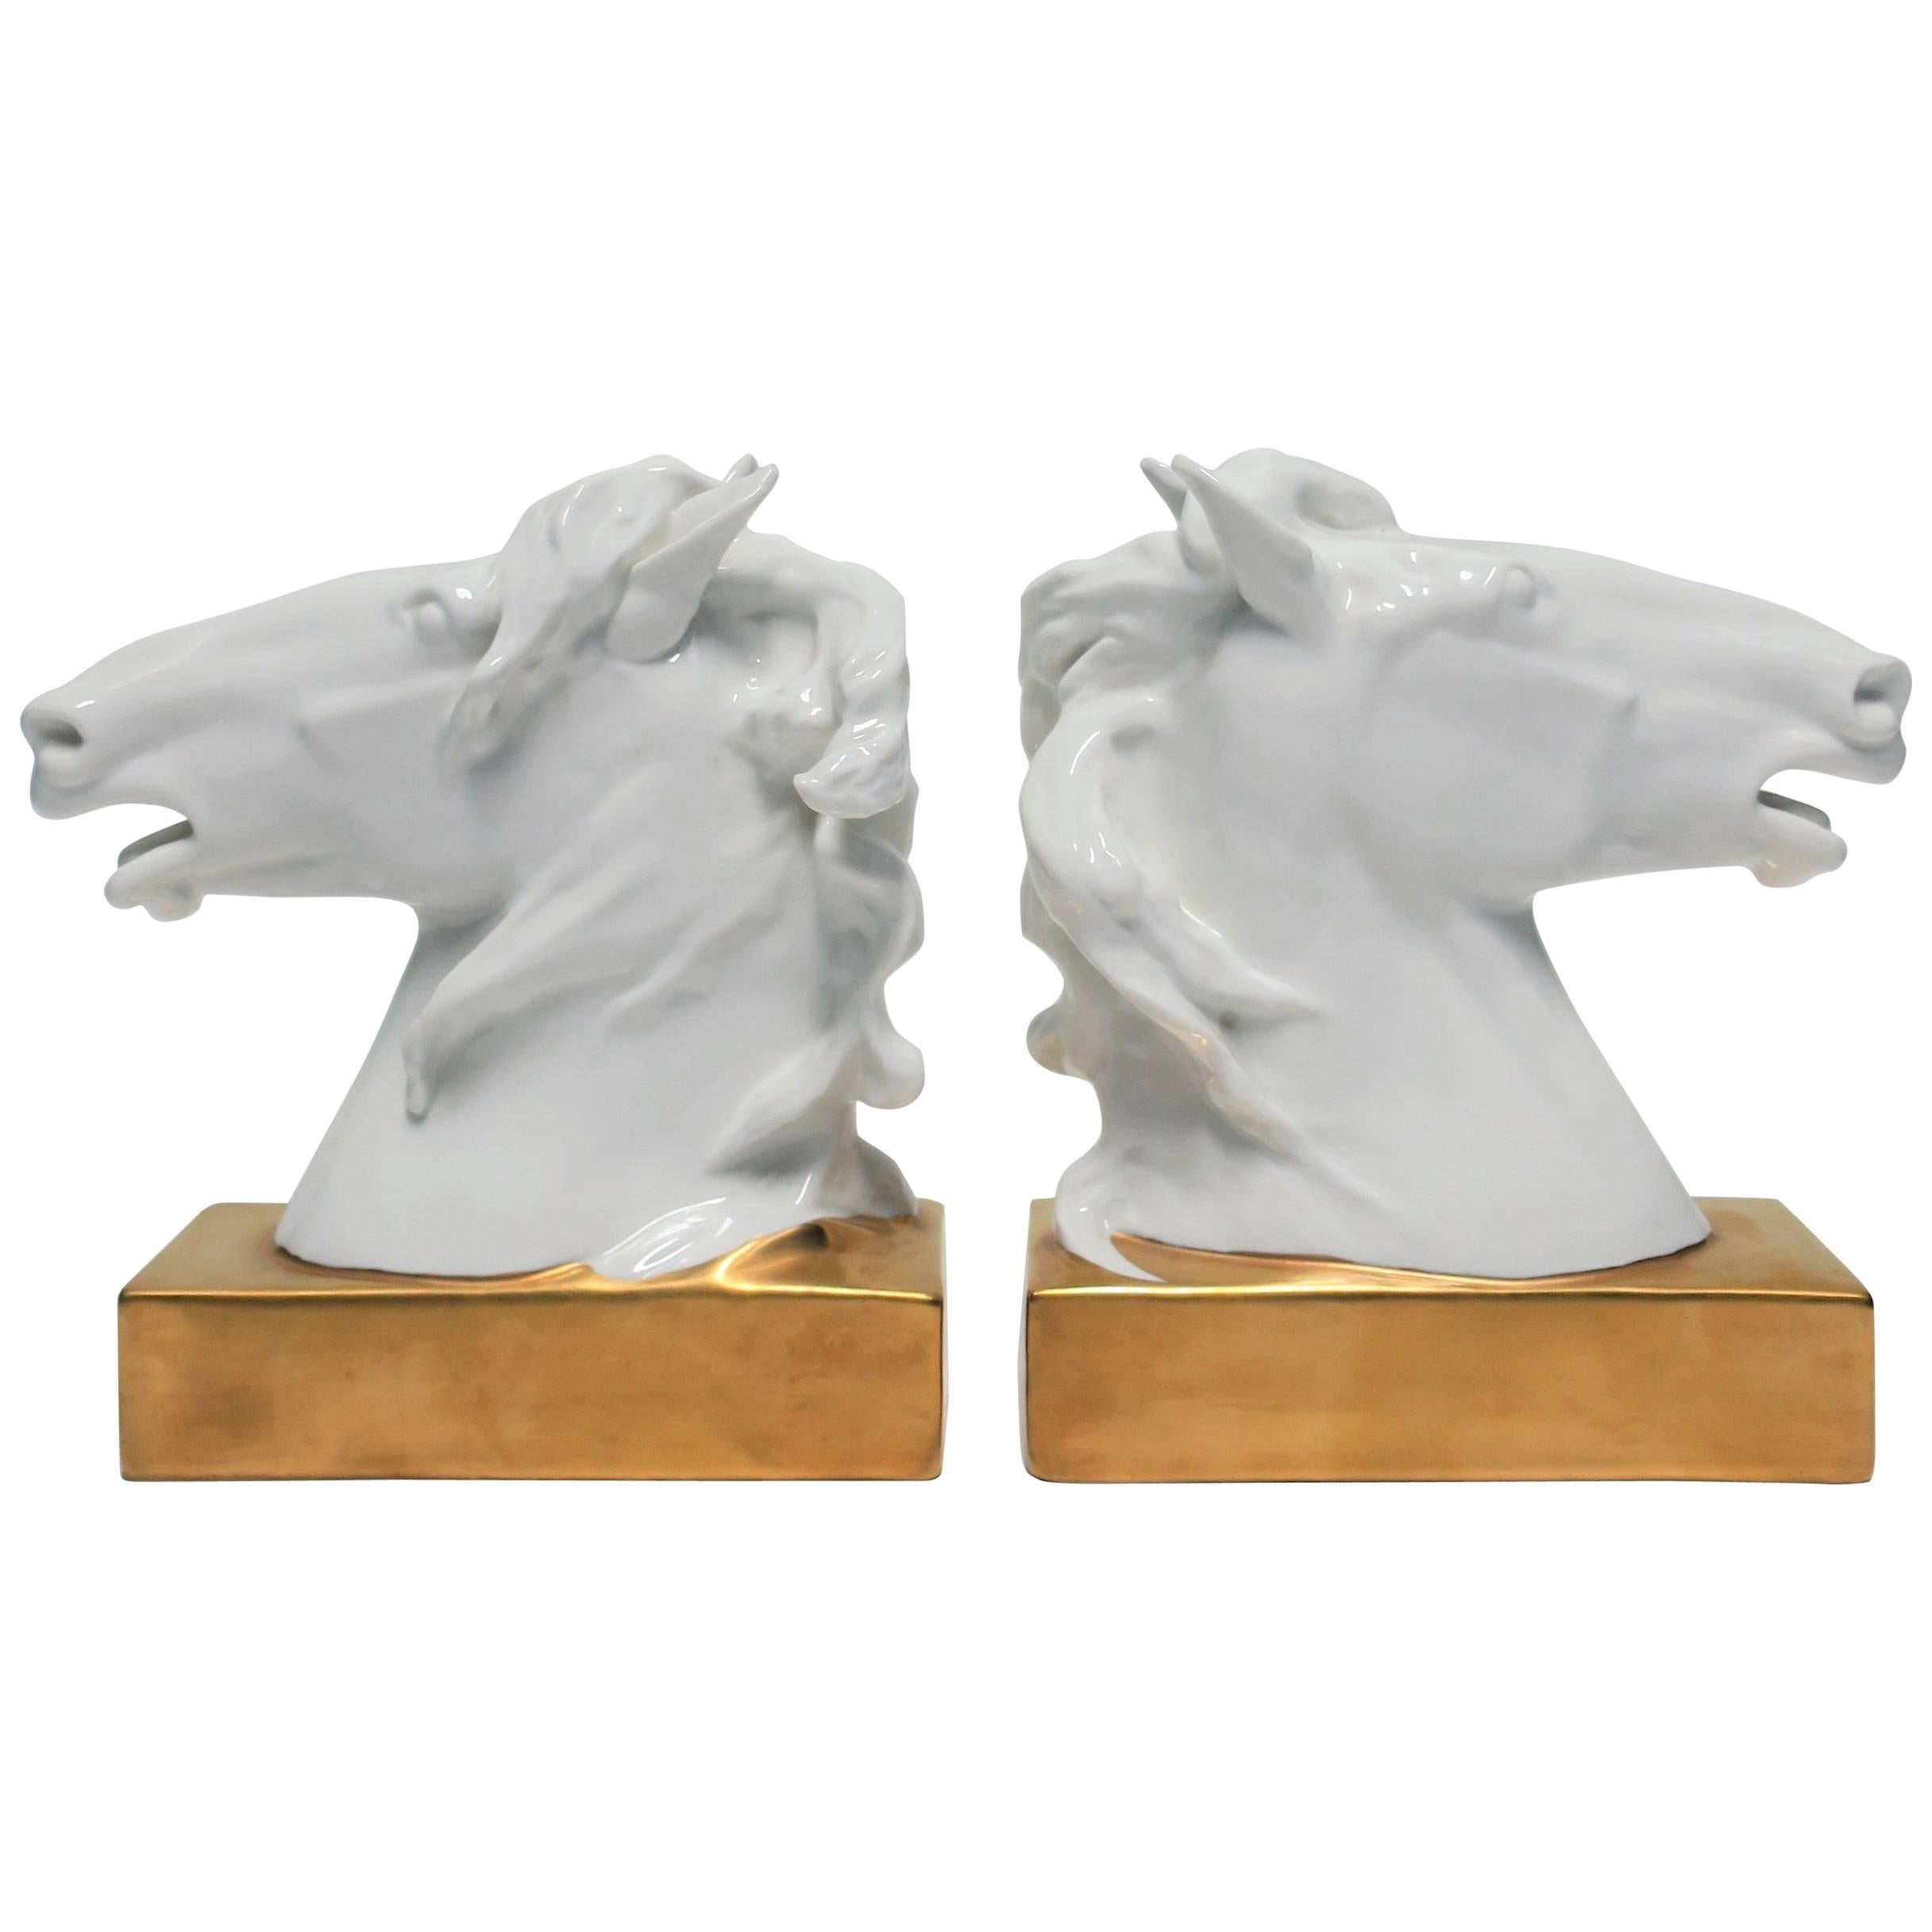 Porcelain Horse Equine Bookends or Decorative Object Sculptures European For Sale